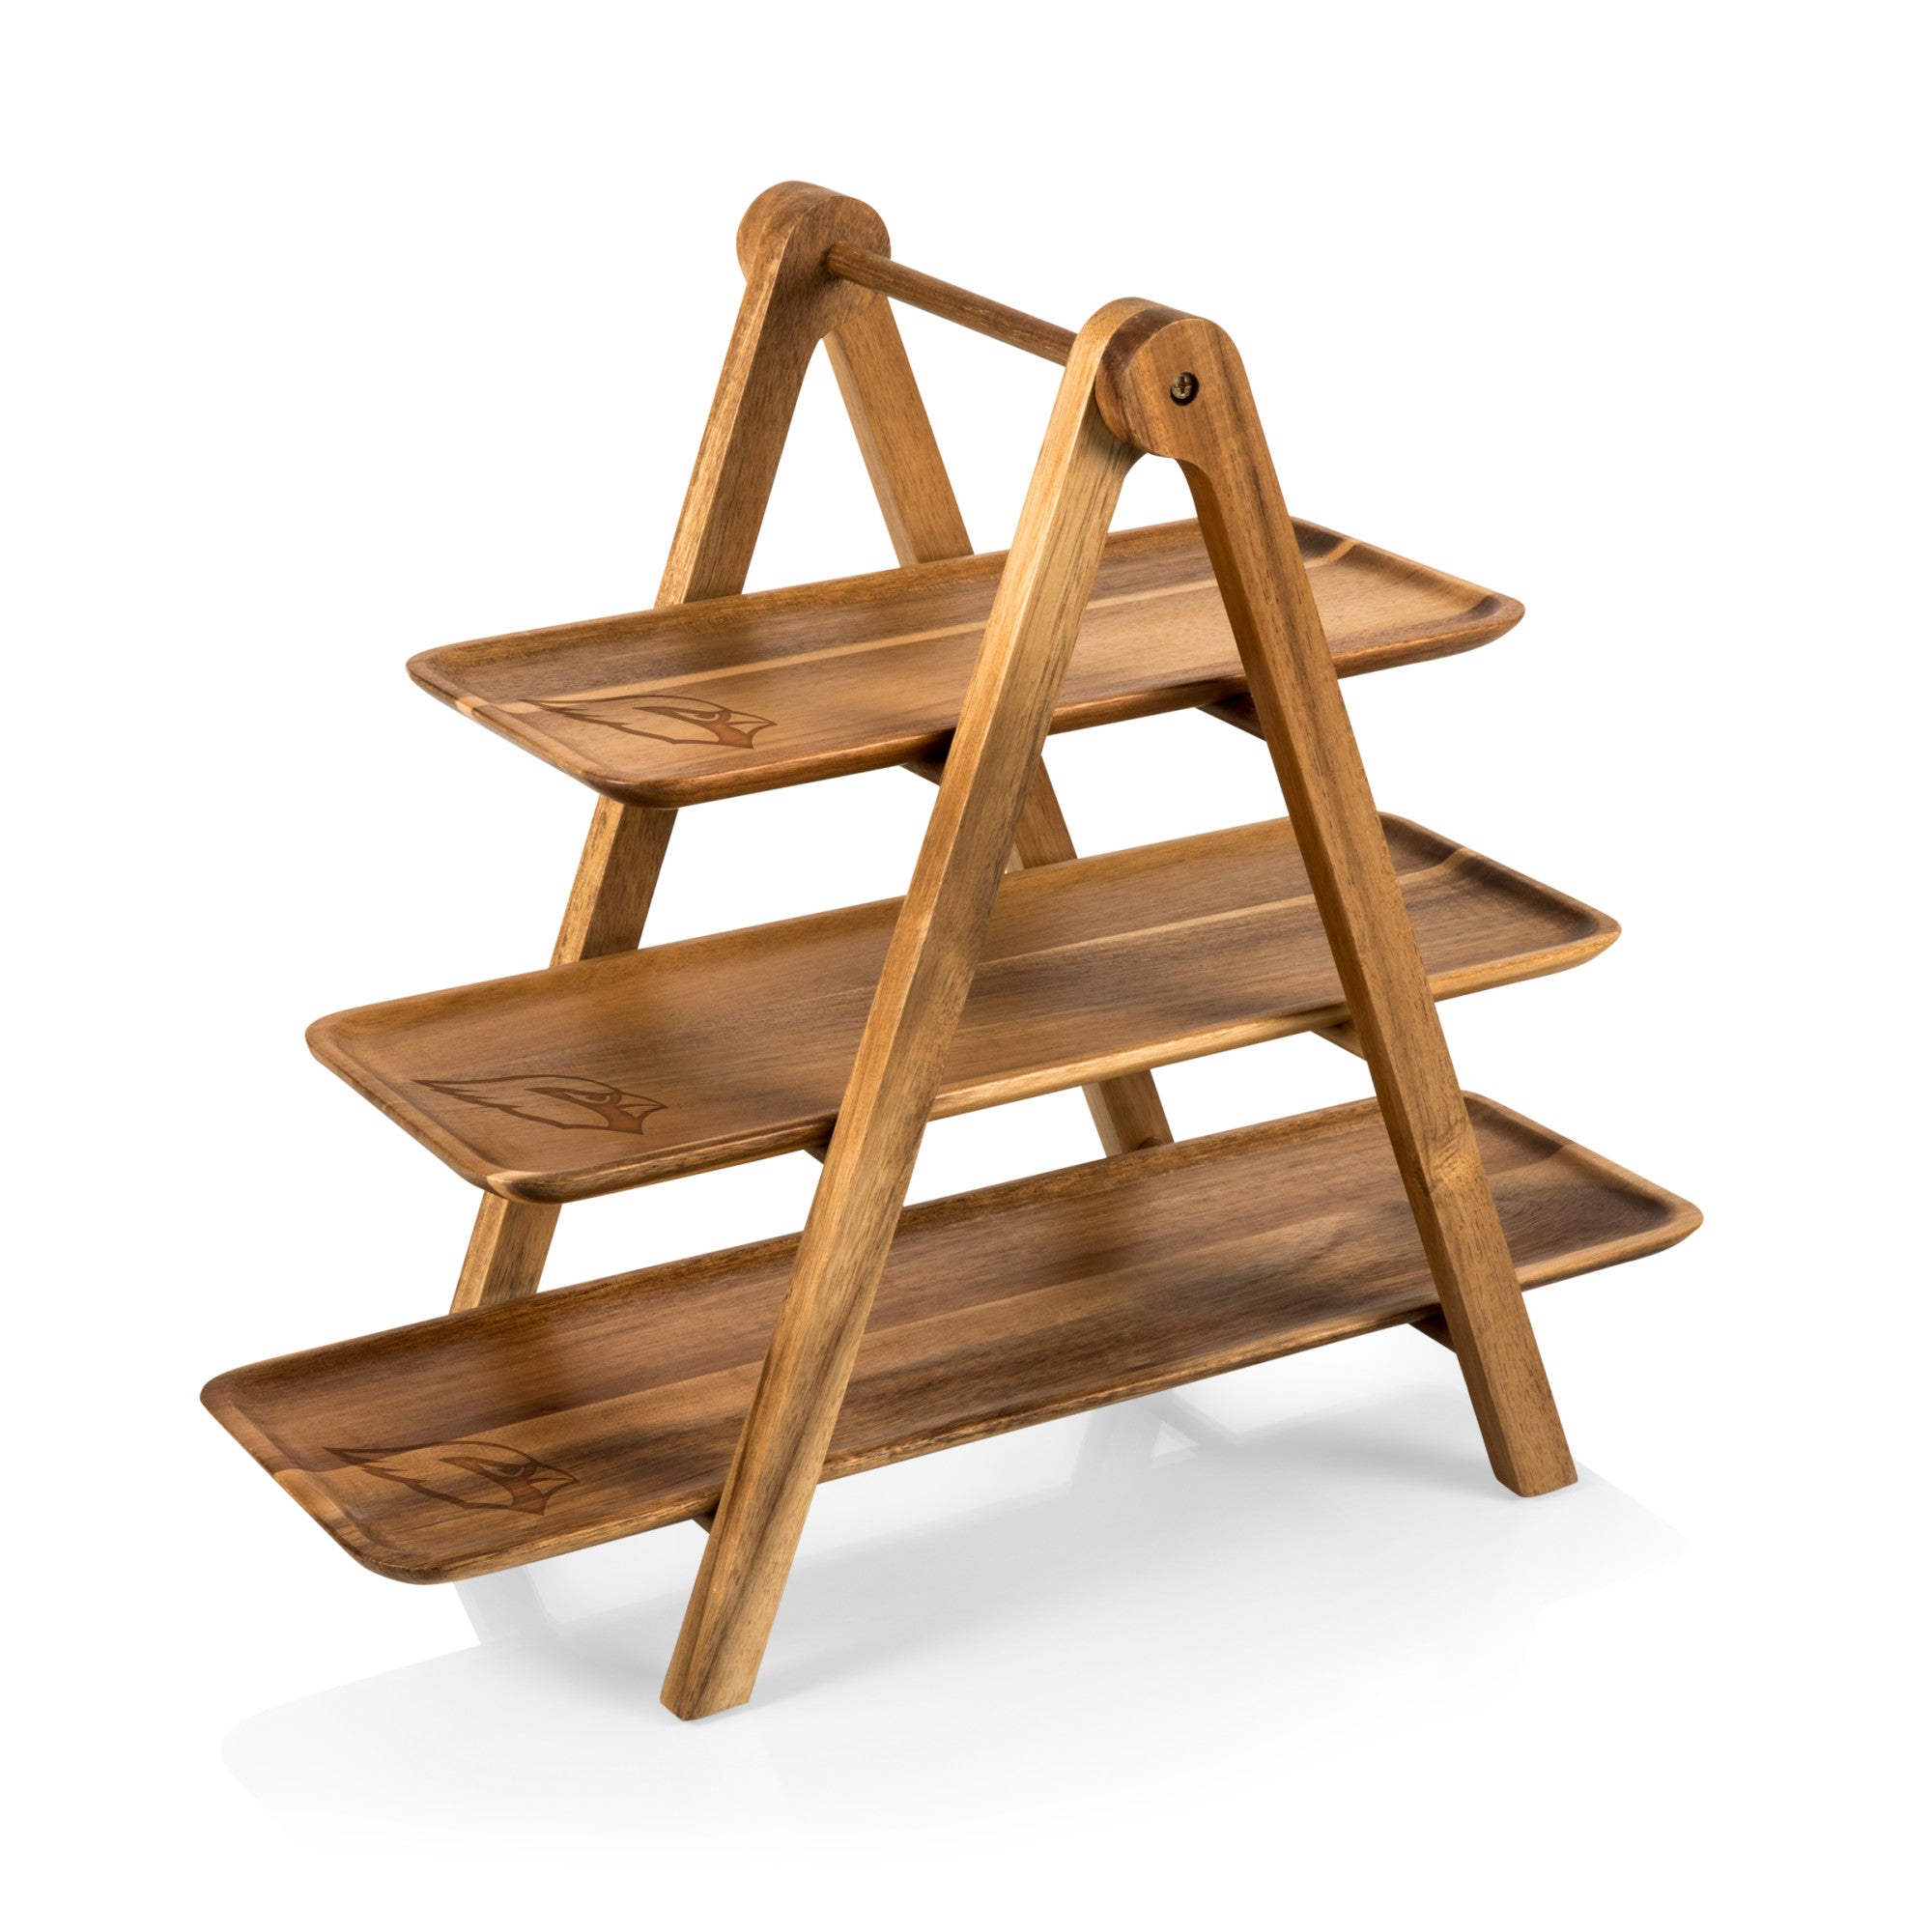 Picnic Time - Arizona cardinals - serving ladder - 3 tiered serving station, (acacia wood)